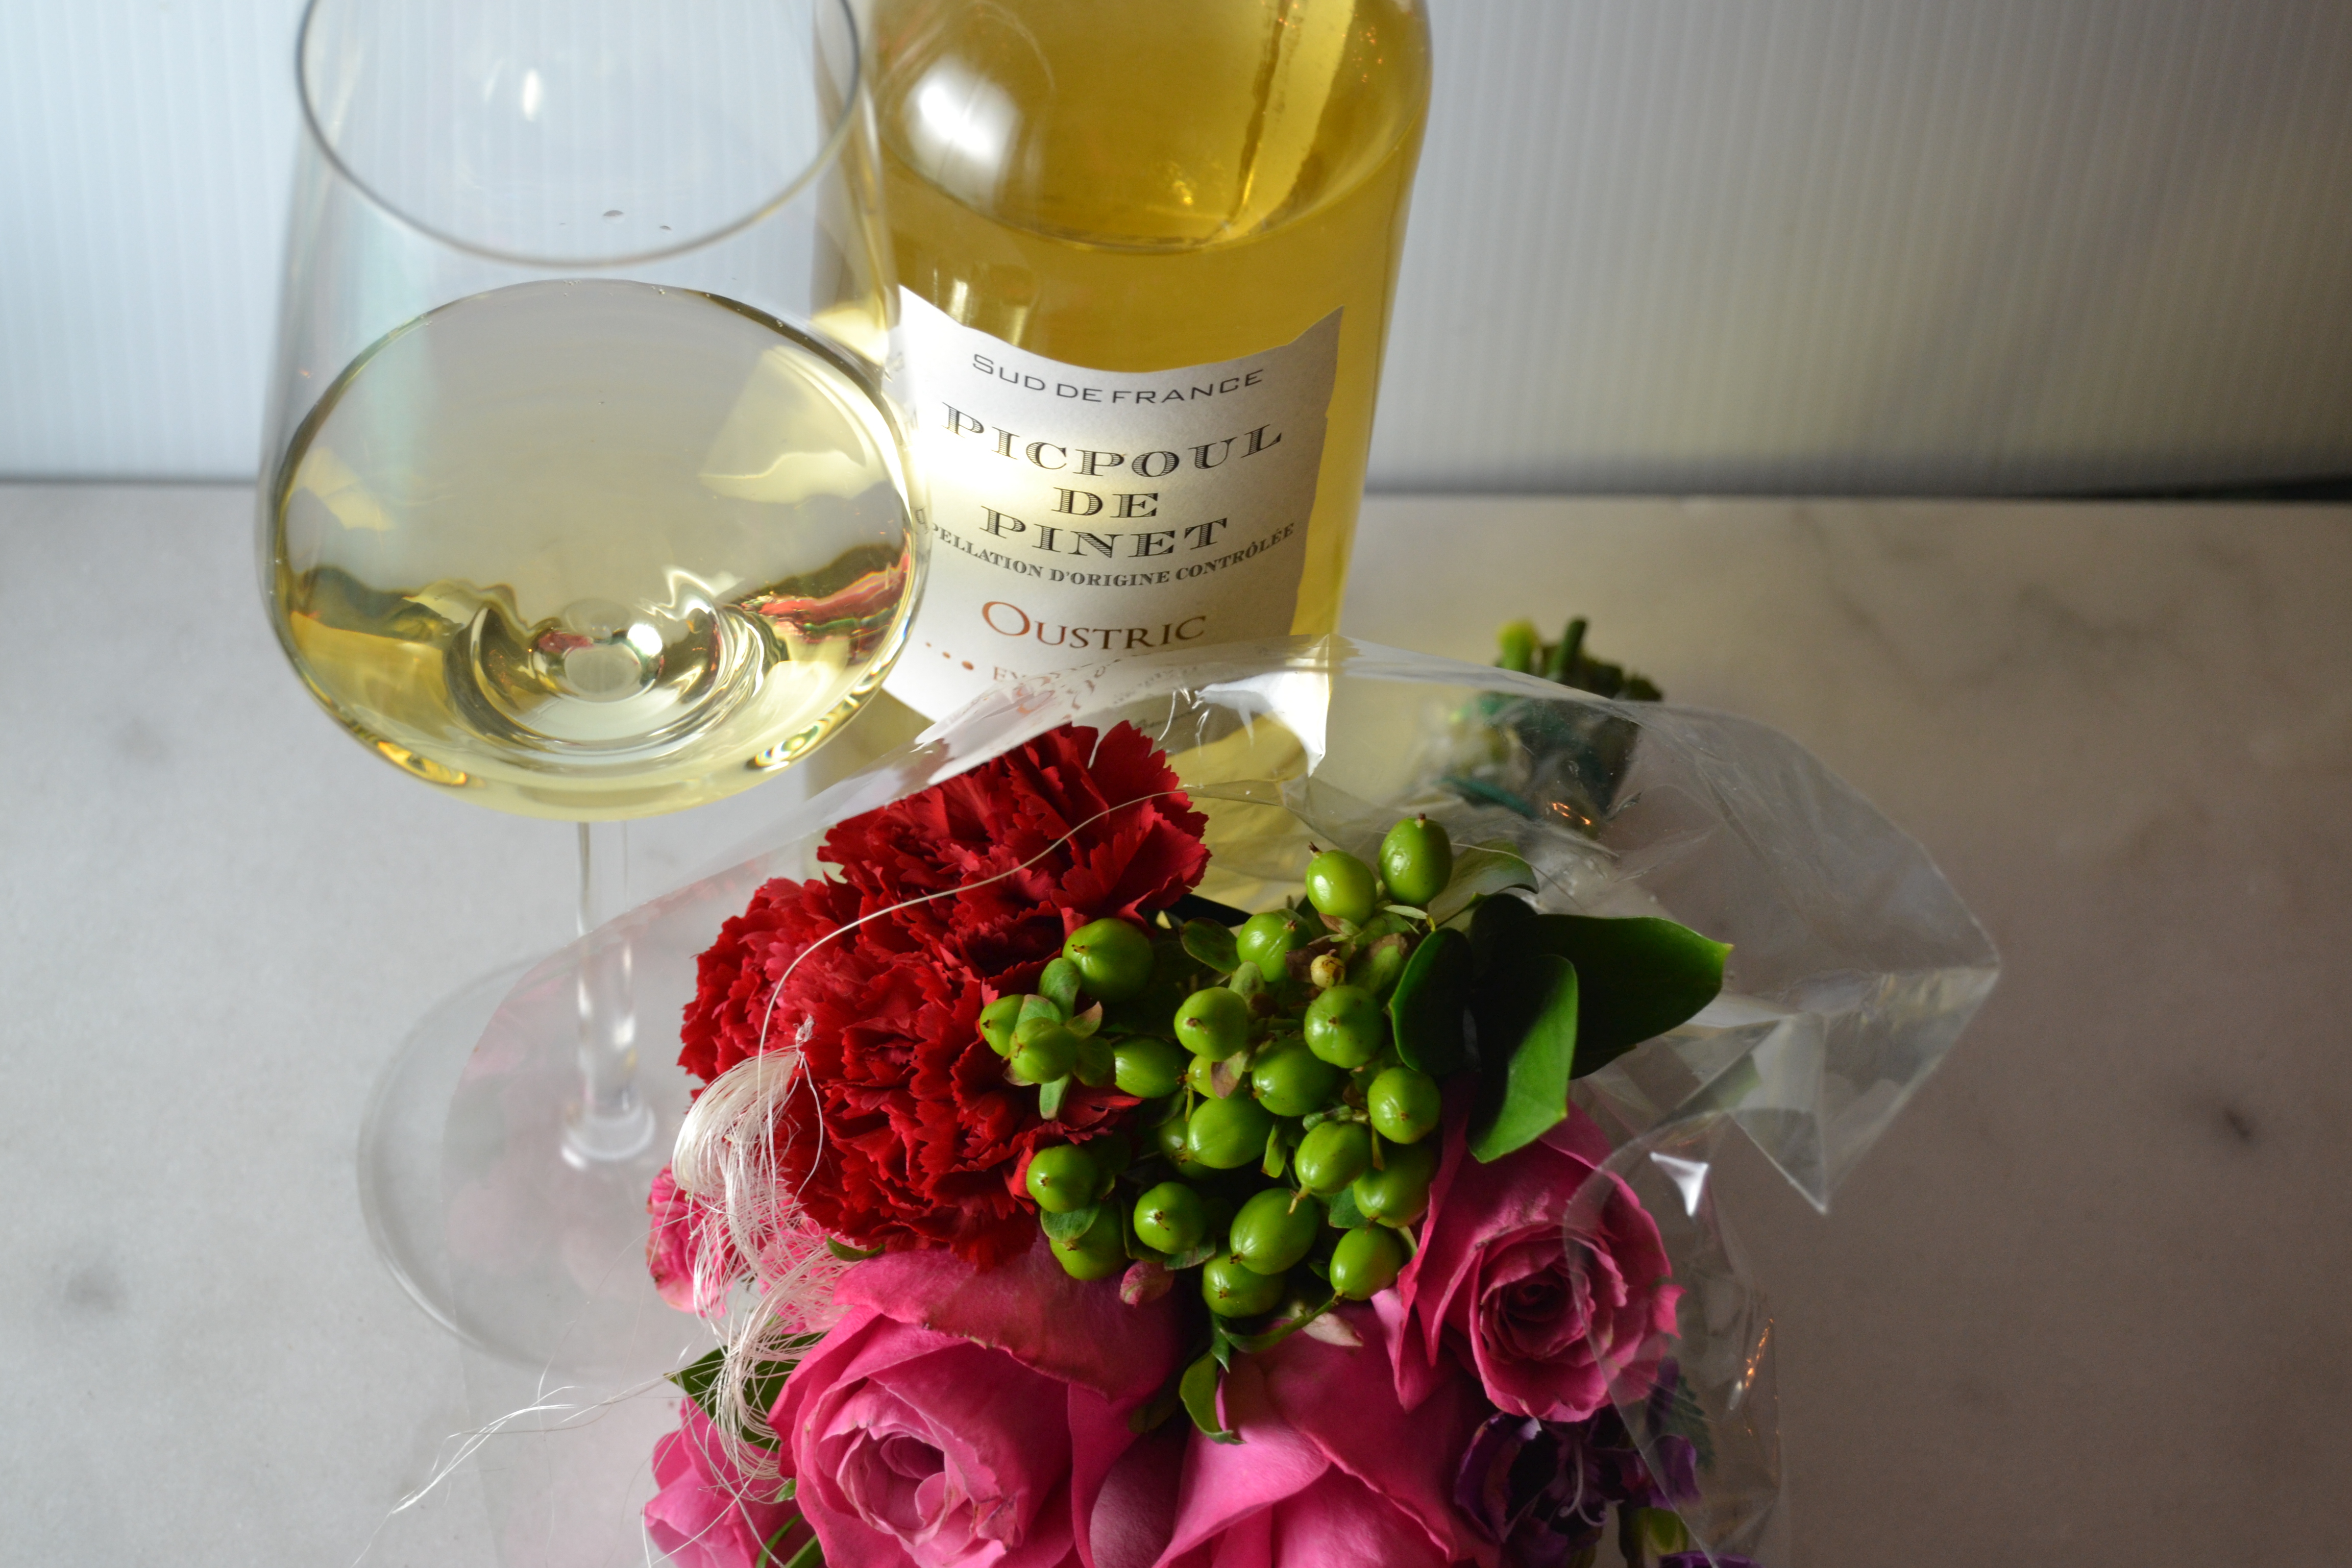 #BloggerCLUE & #WinePW – Valentine’s Day Take-In Dinner